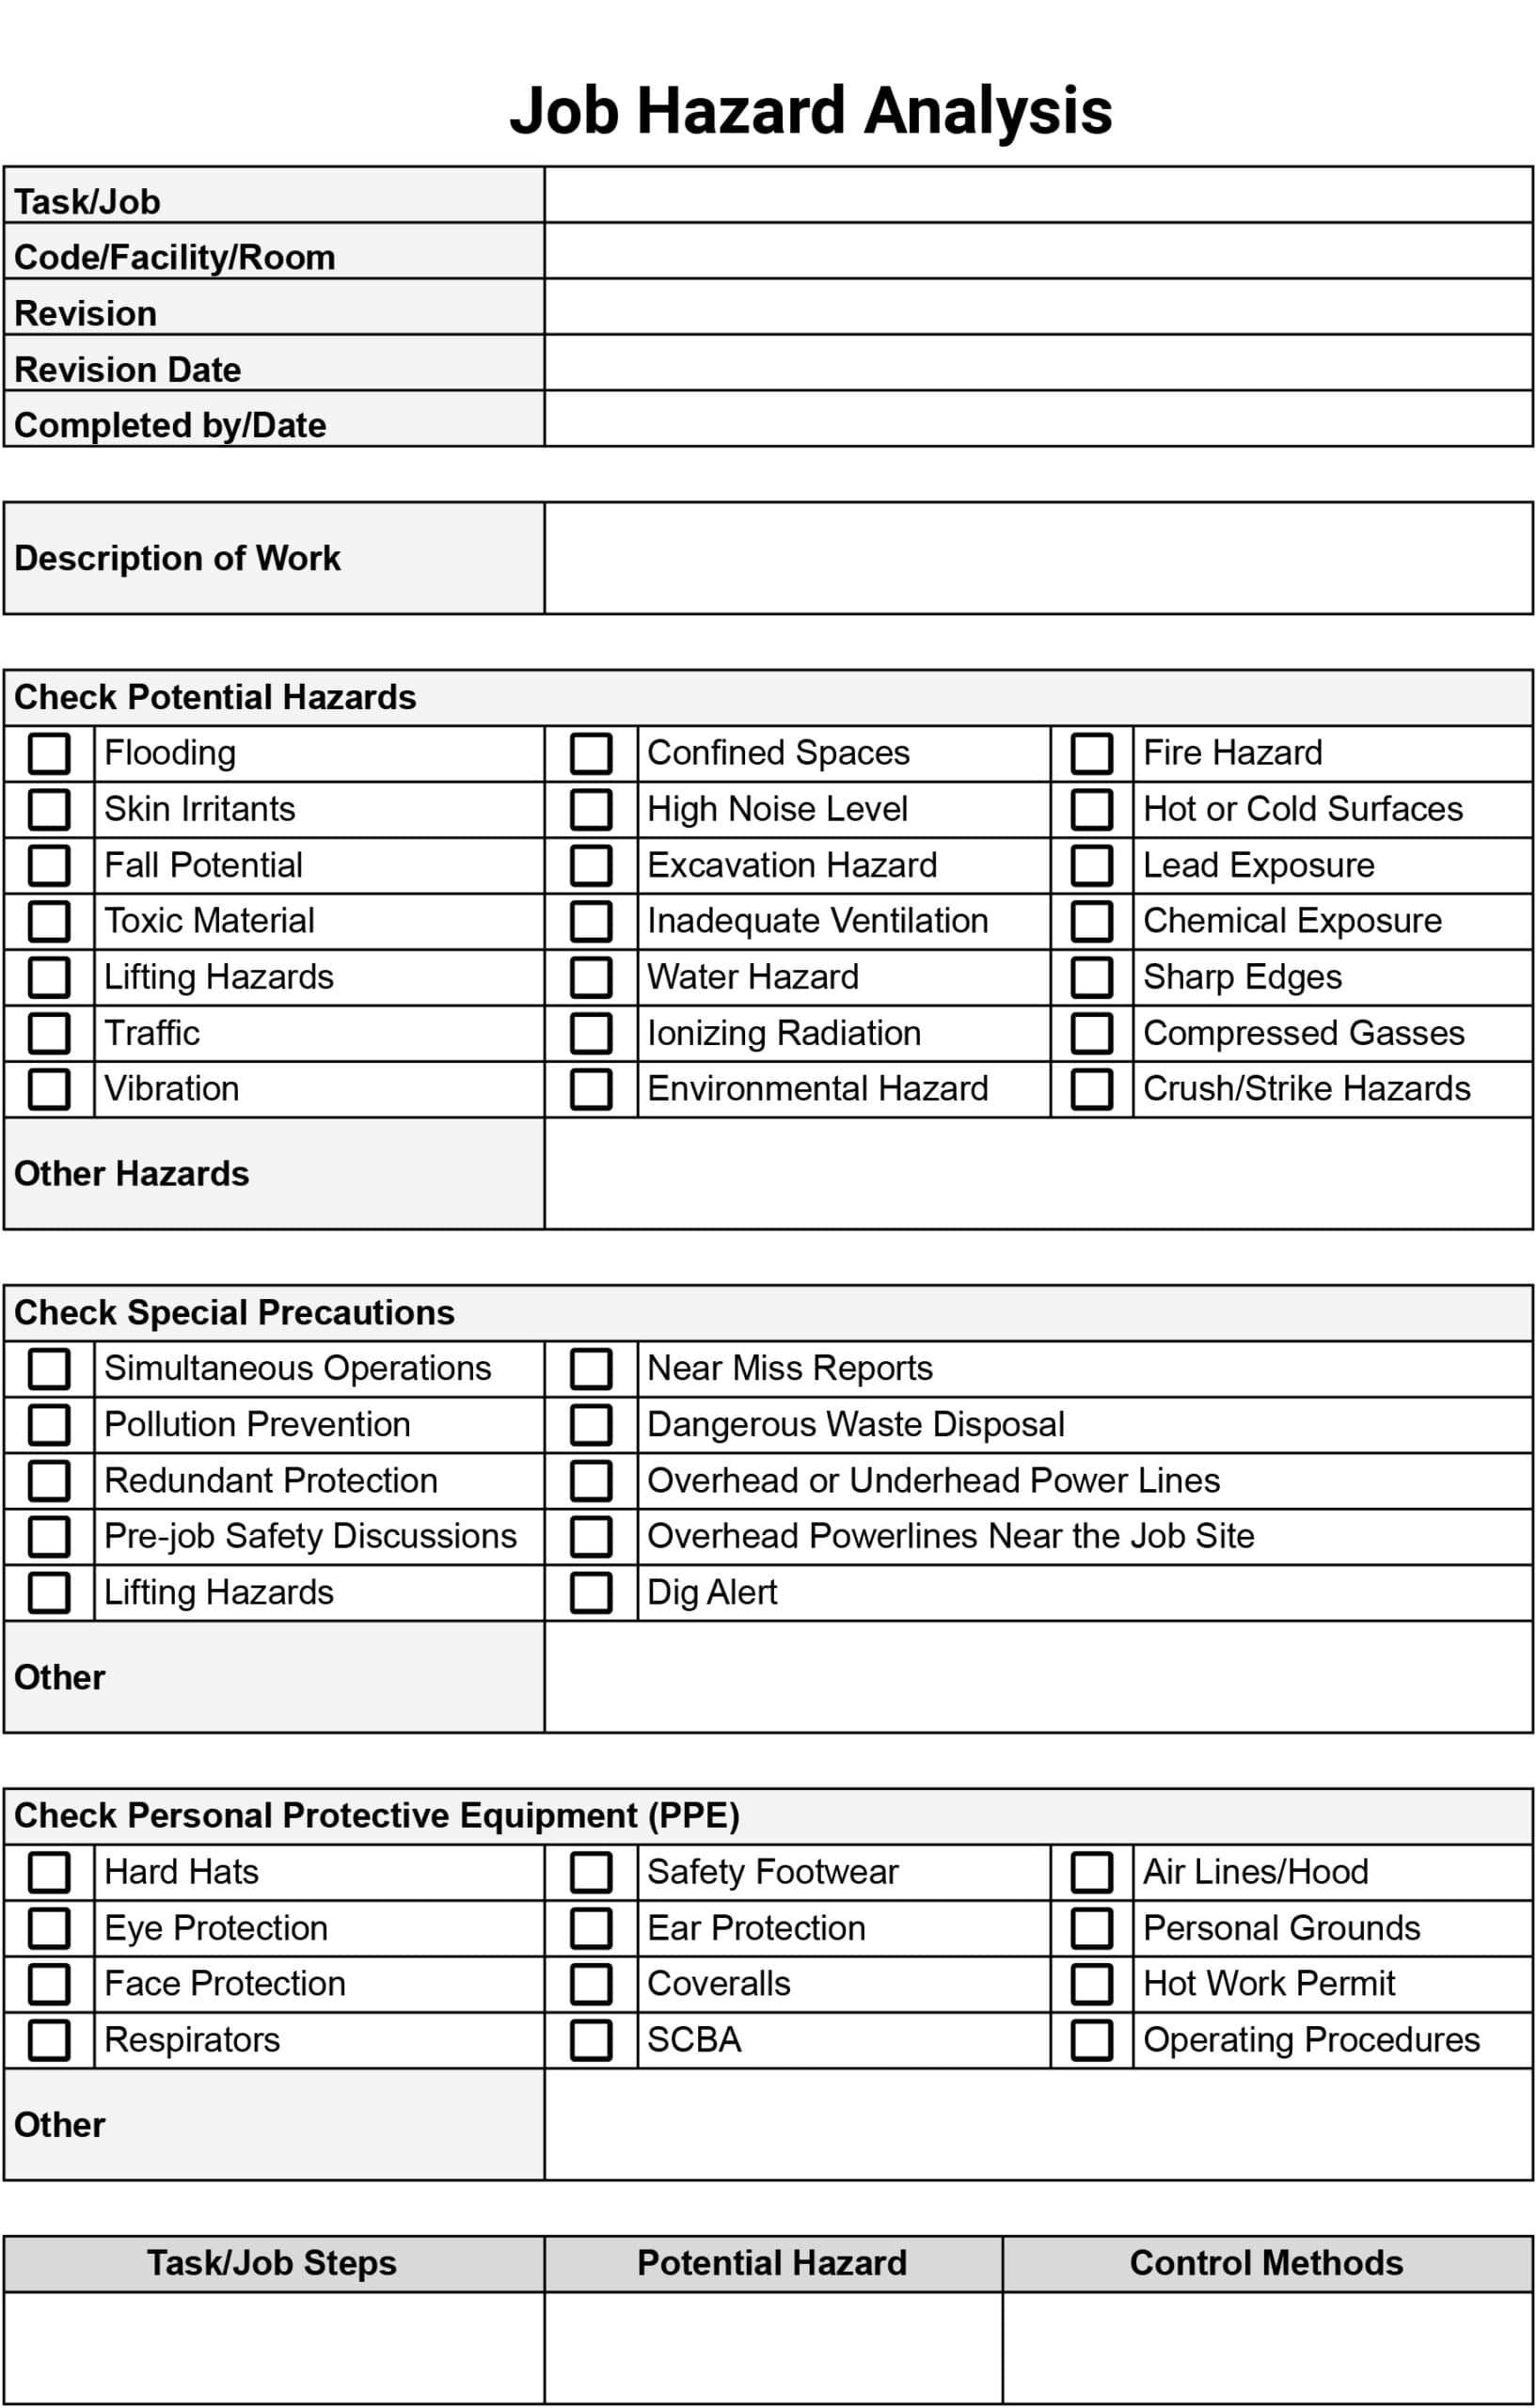 Job Hazard Analysis Form